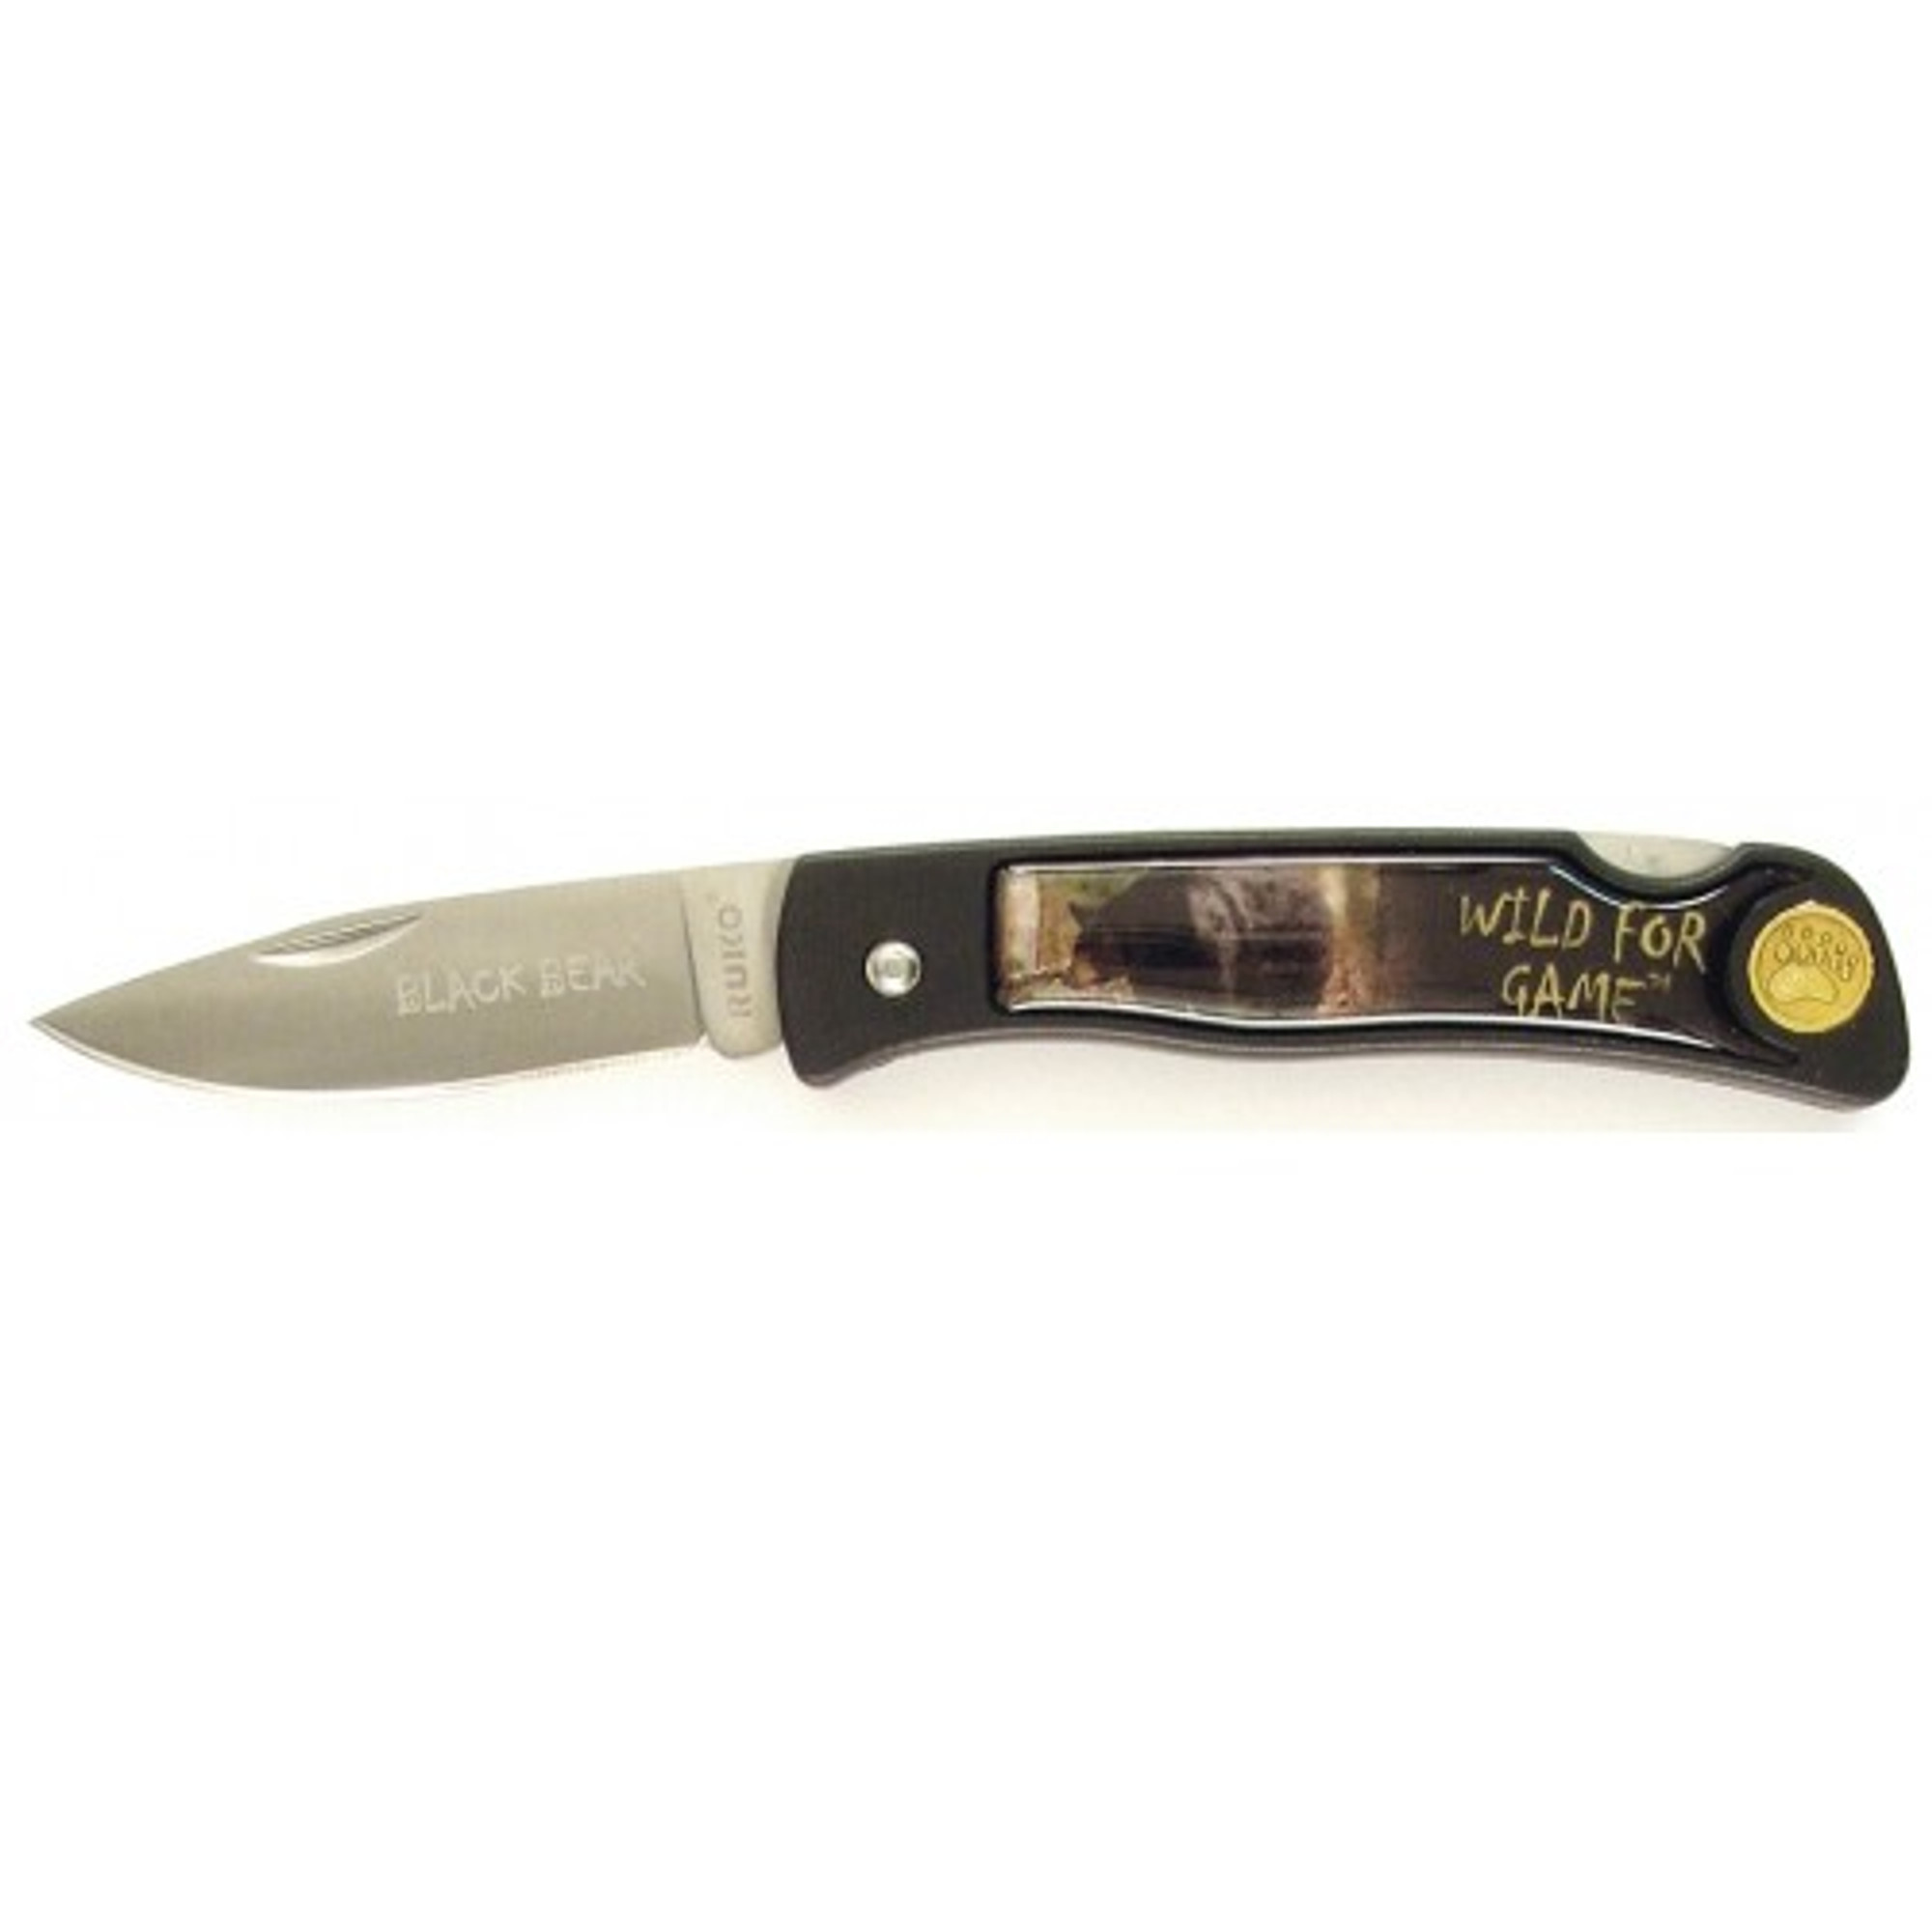 RUKO RUK0130BB, 420A, 2-1/2" Folding Blade  Knife, Black Bear Image on Nylon Handle, boxed